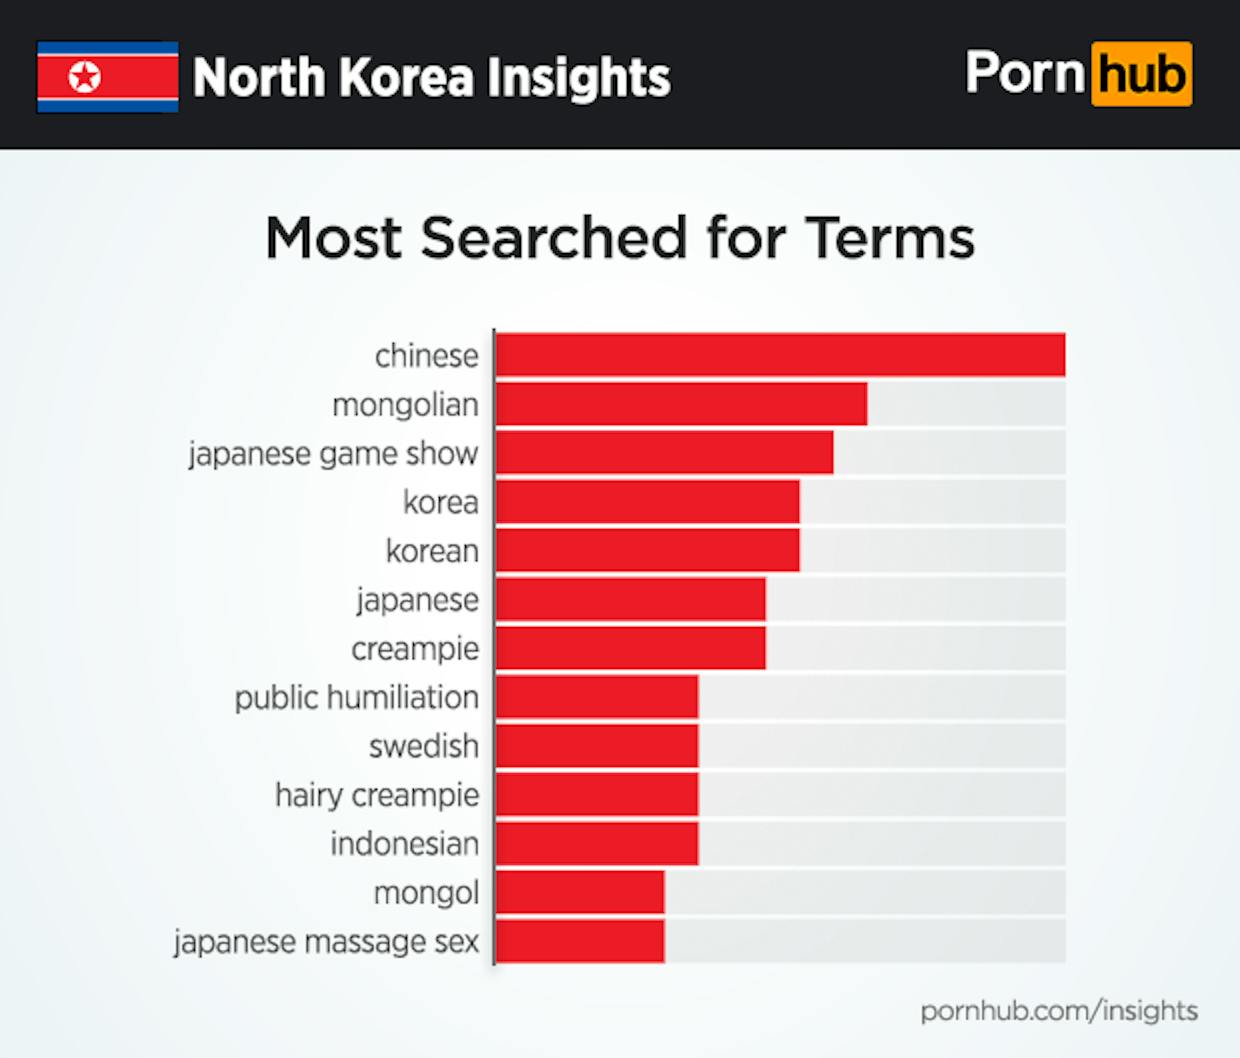 North Korea Traffic Ladies - Pornhub Just Released New Data on What North Koreans Watch ...